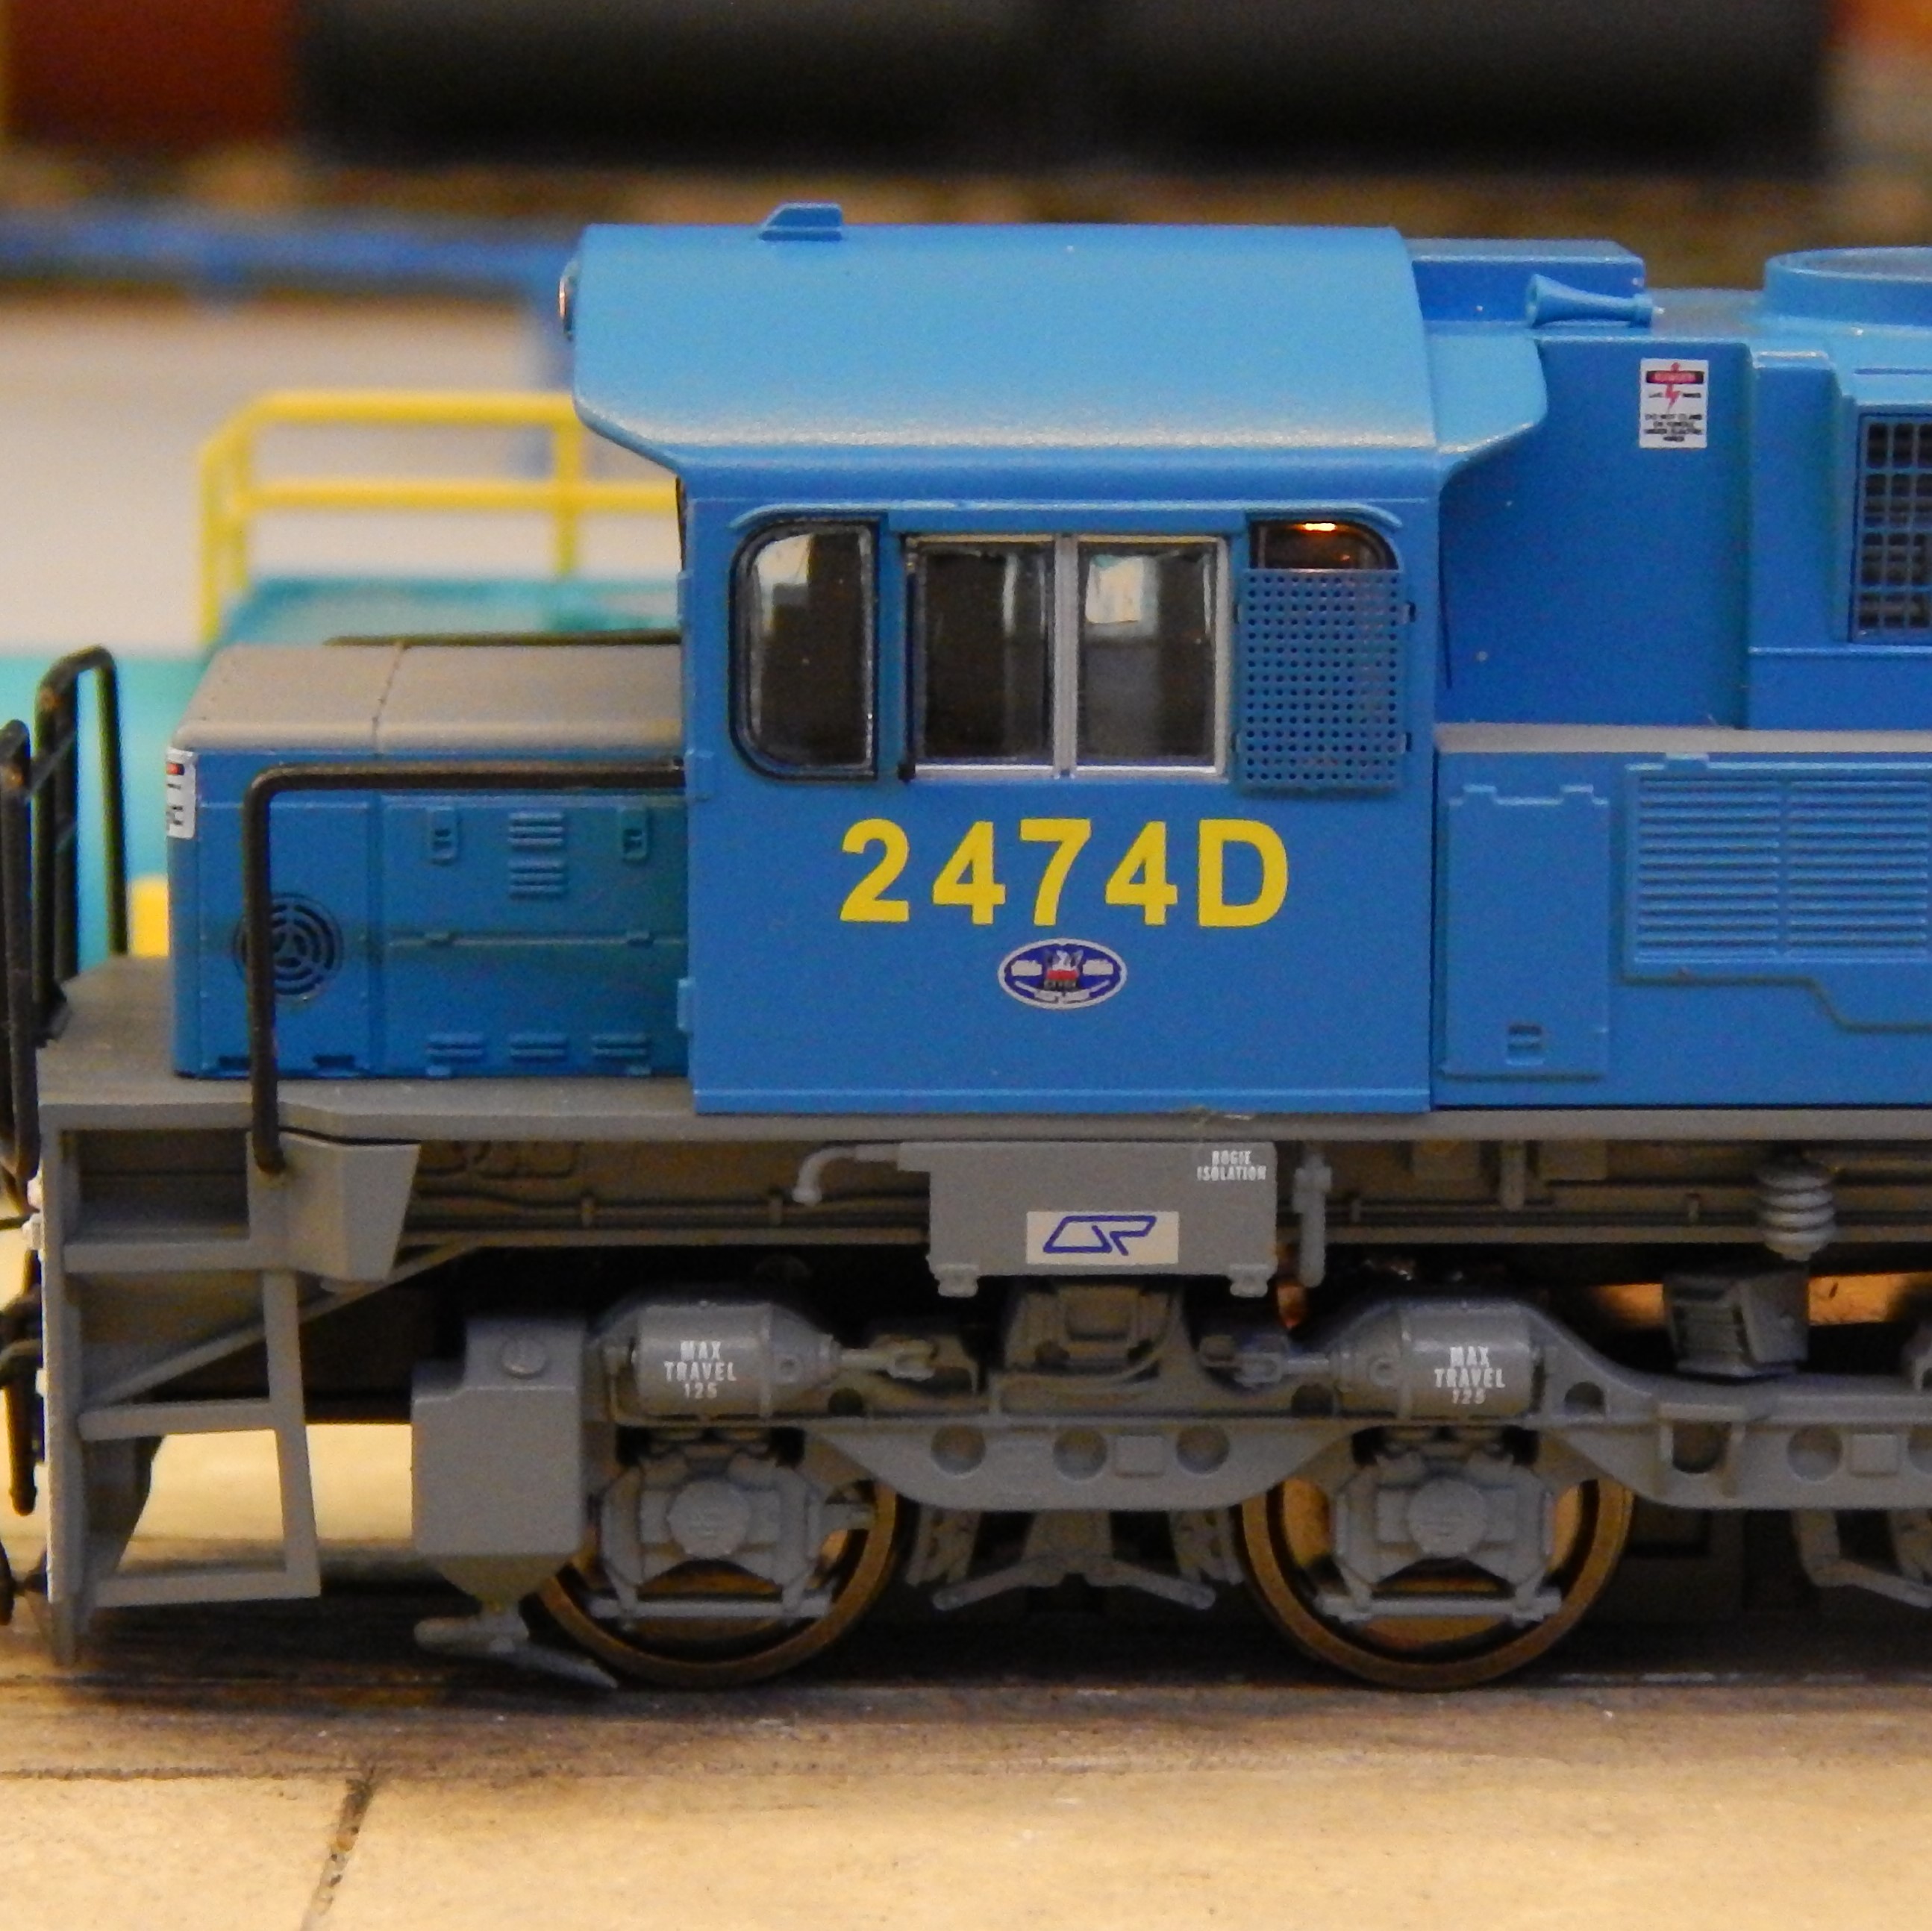 RTR070HO 2470 Class Locomotive #2474D HO (16.5mm Gauge)